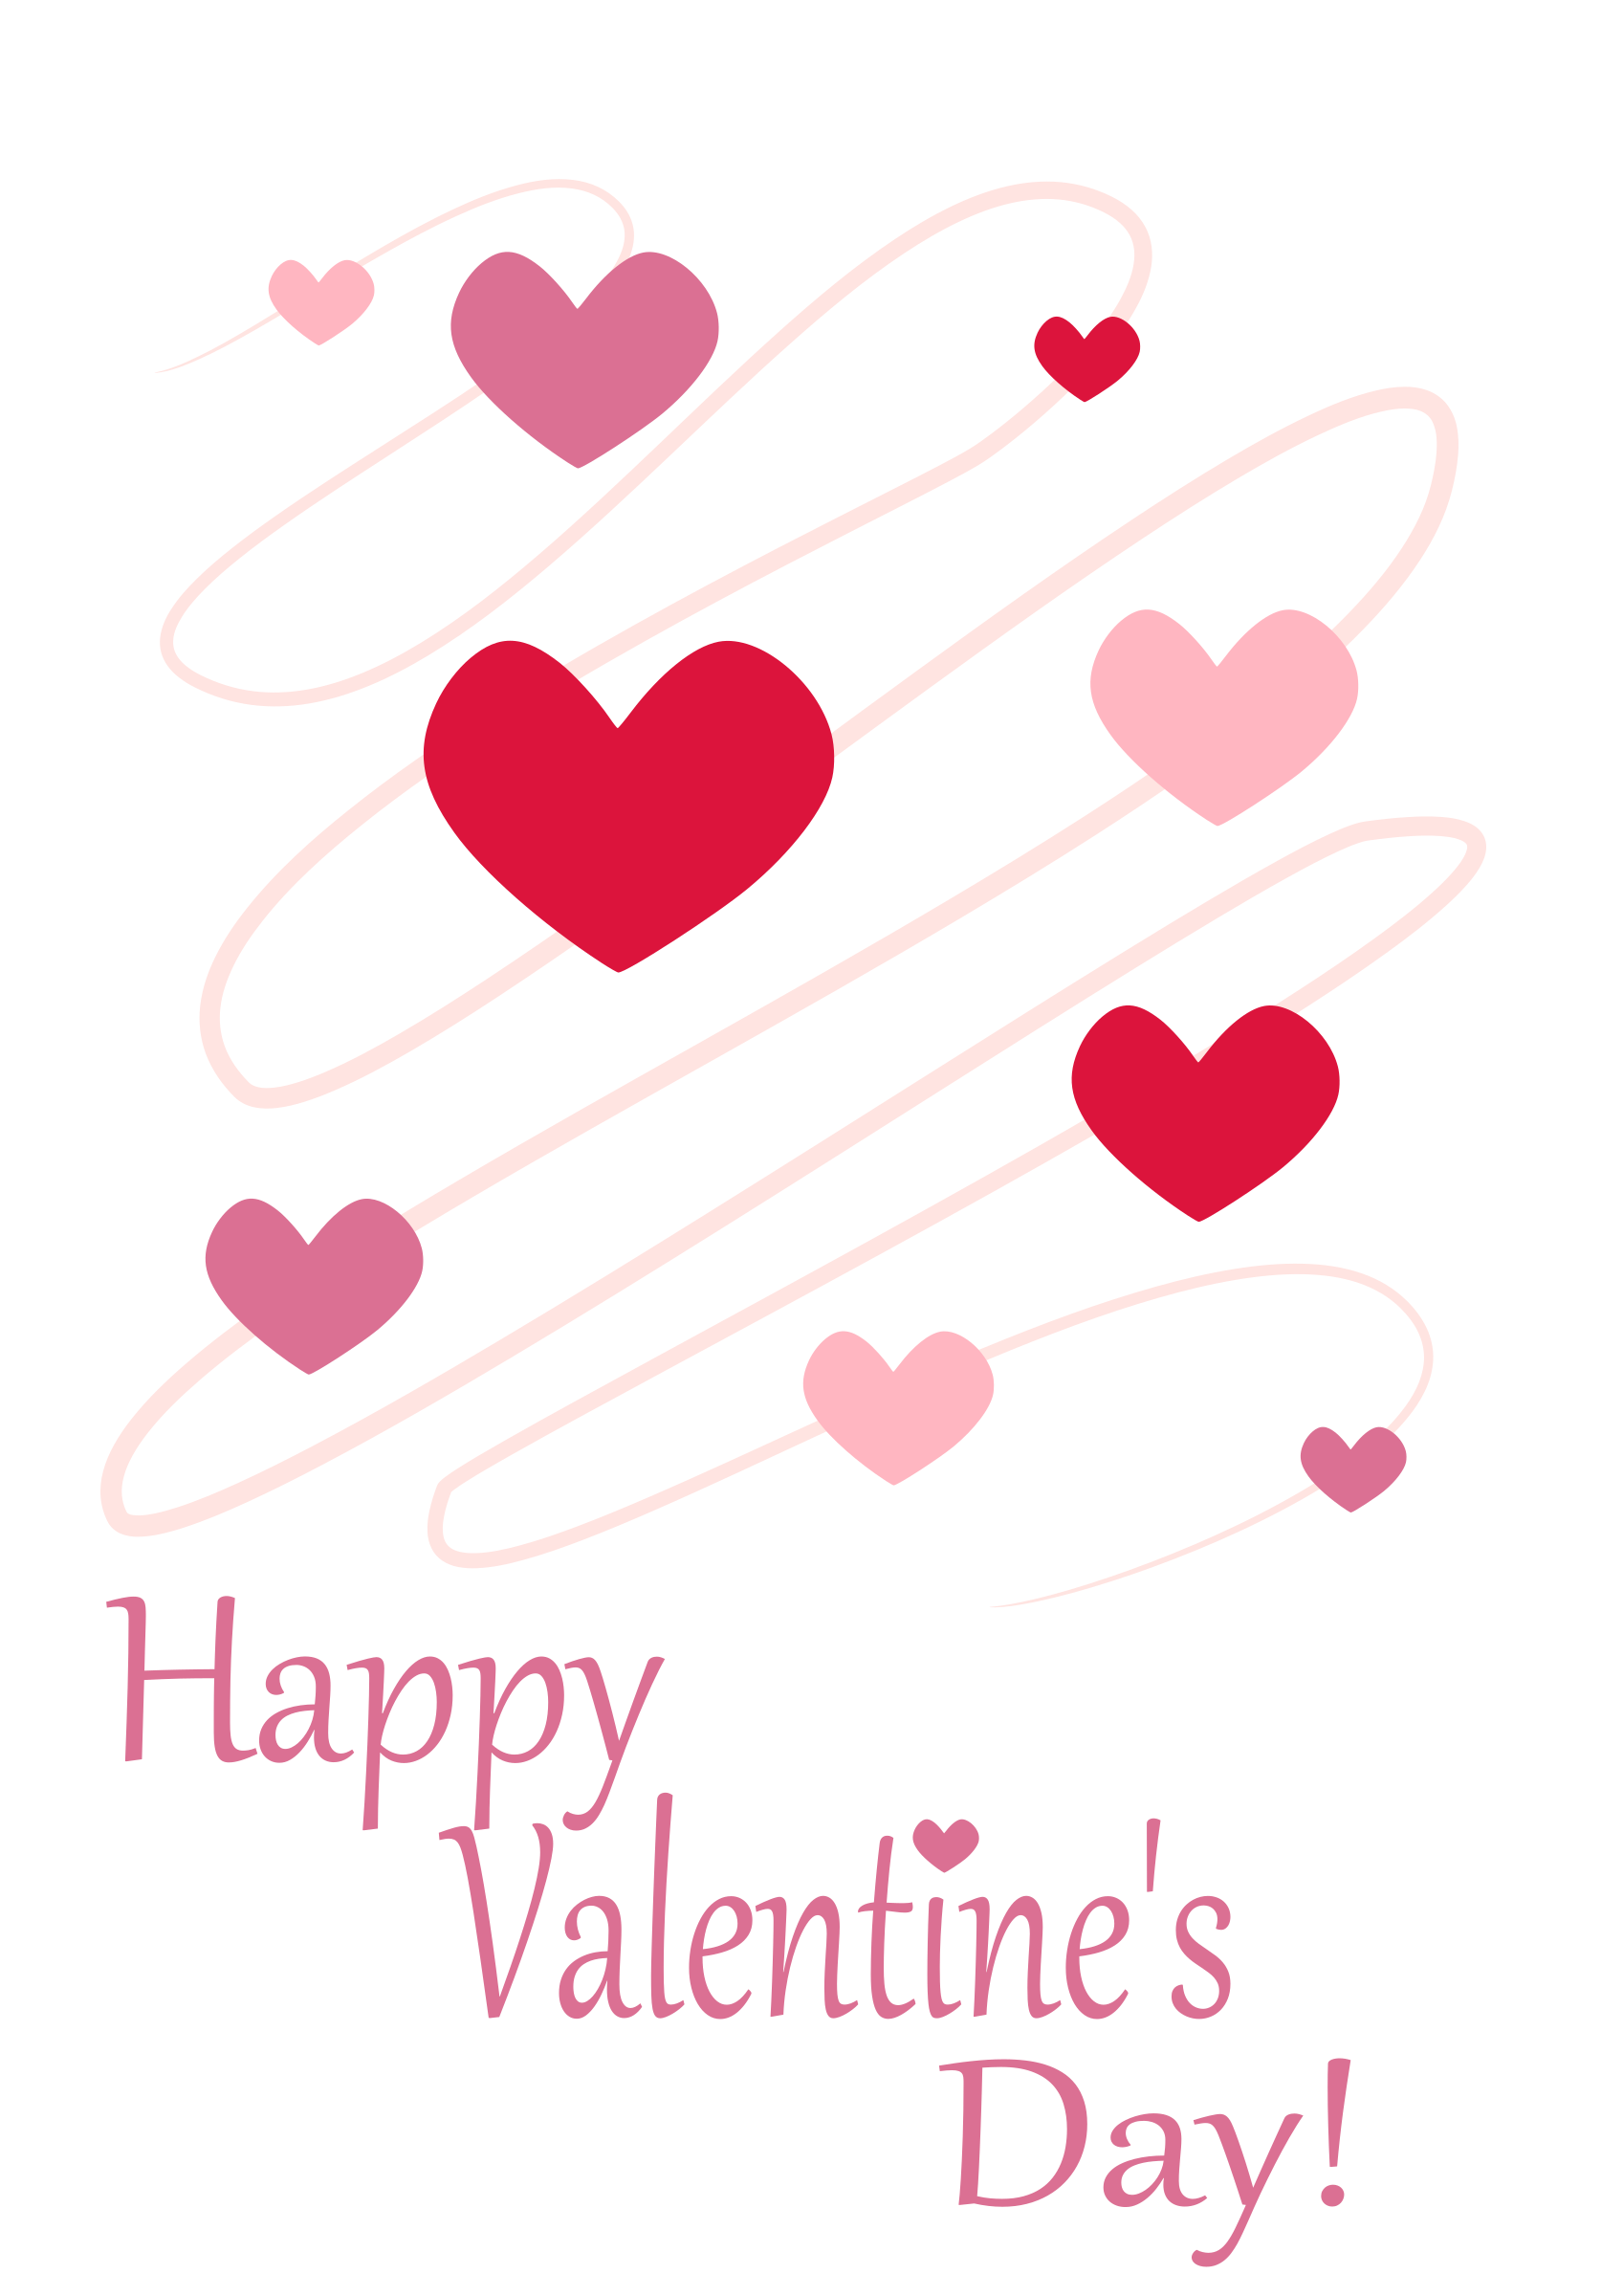 Hearts clipart card. Valentine heart big image